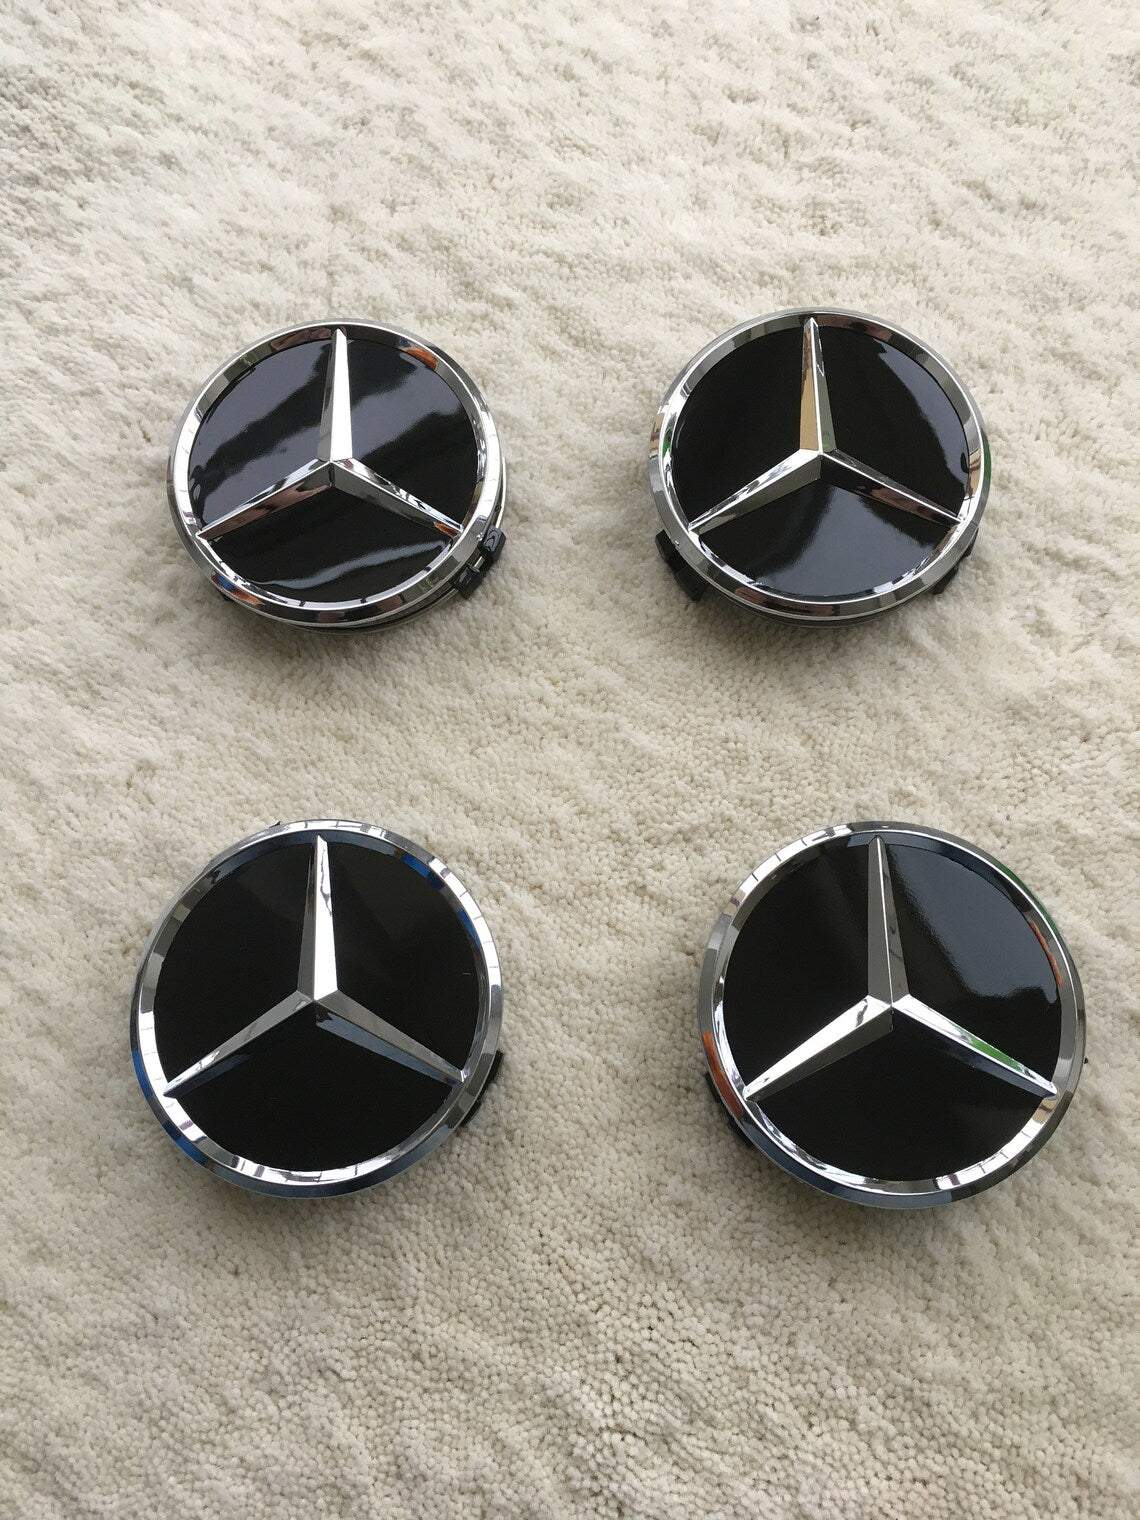 4 Pcs ( Set ) wheel center hub caps for MERCEDES 60 mm- 2.36 Inch Black